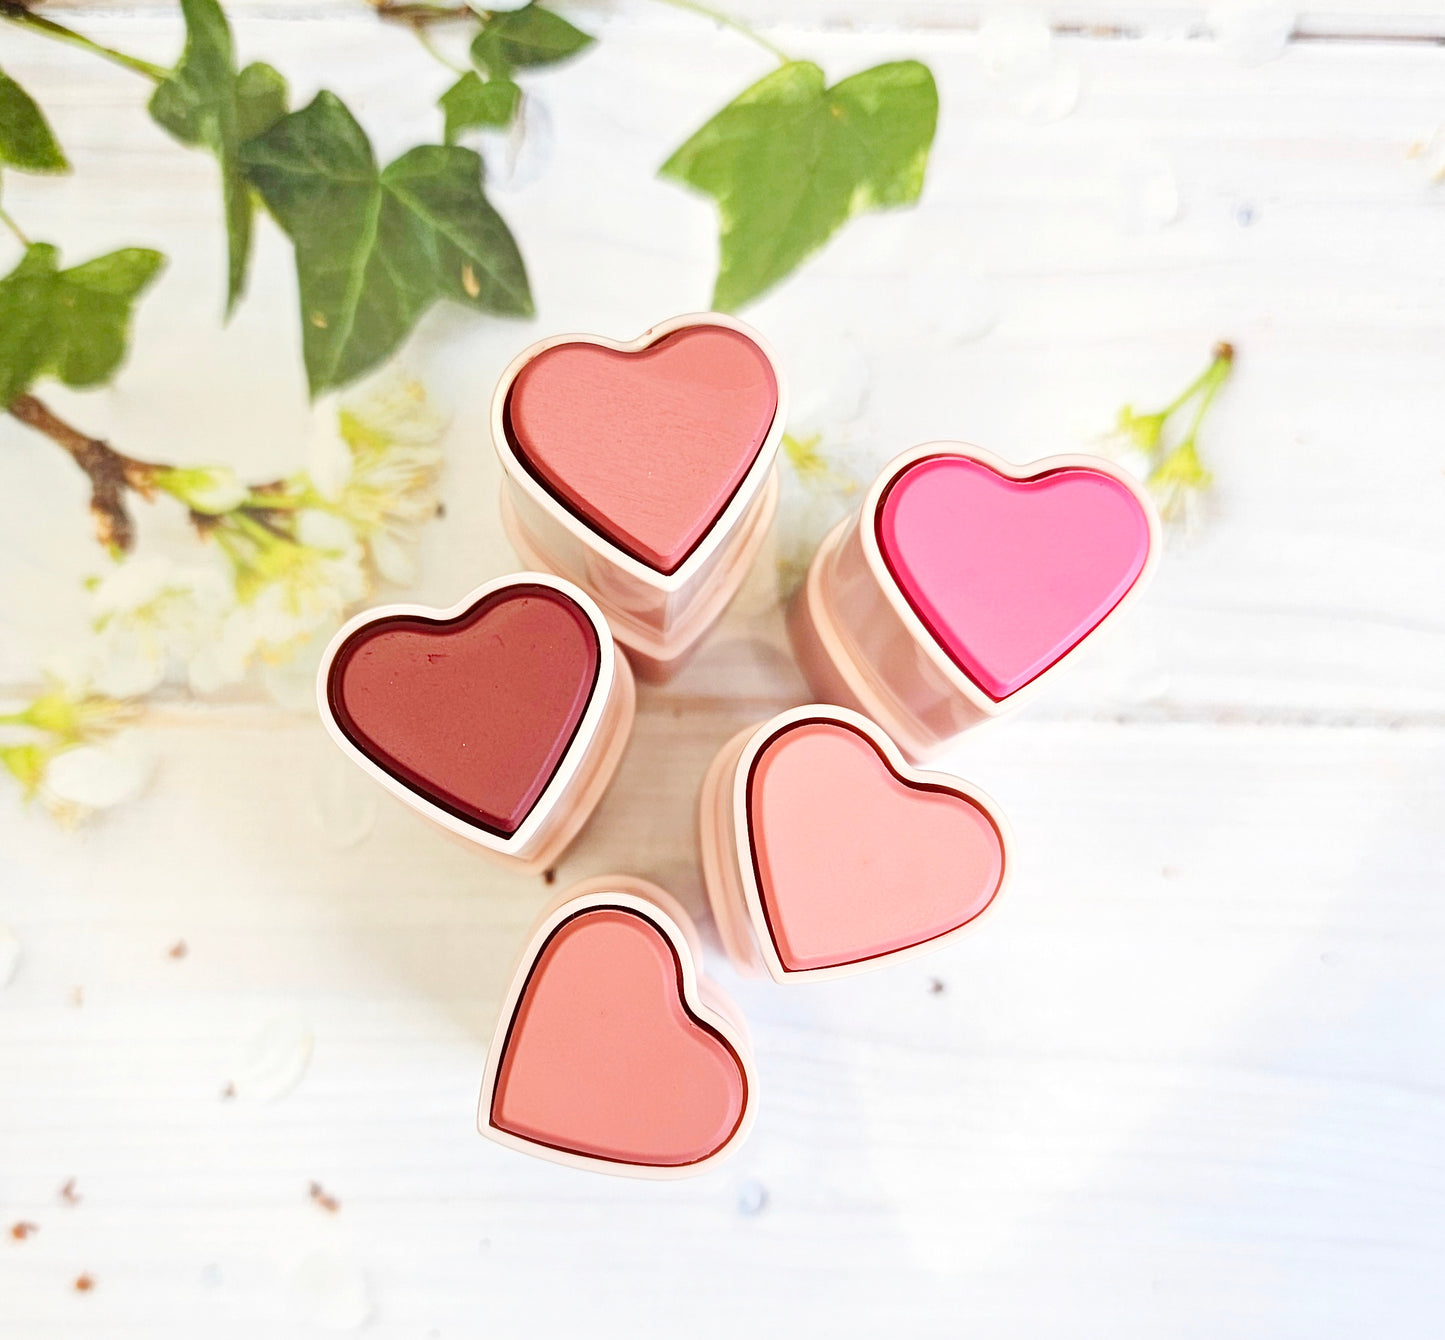 Heart shaped cream blush stick